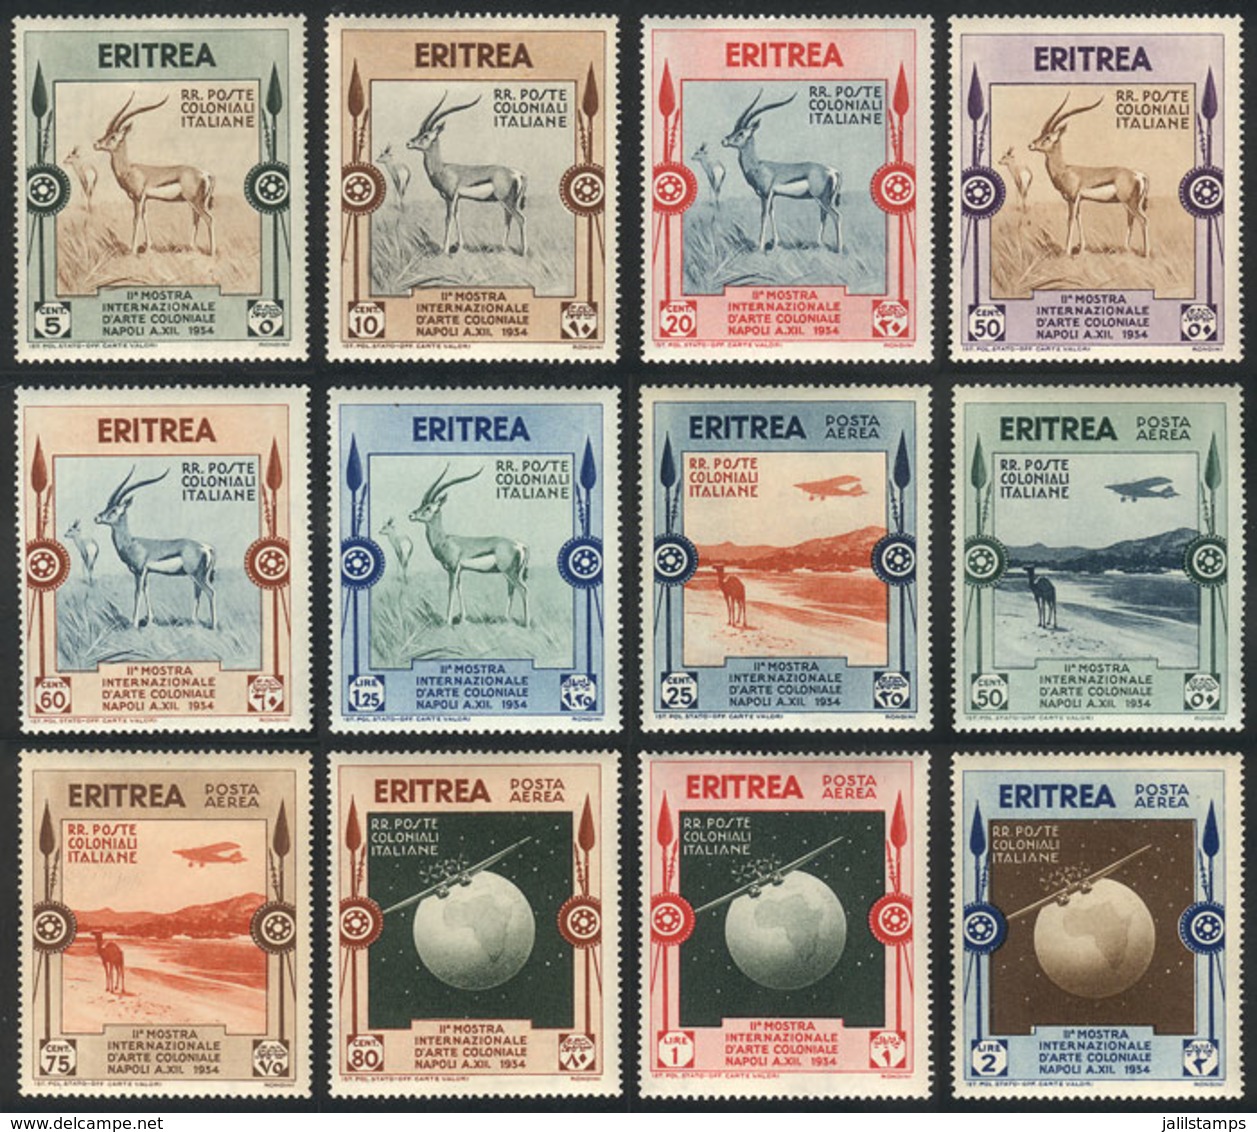 ERITREA: Sc.175/180 + C1/C6, 1934 Animals, Etc., Cmpl. Set Of 12 Values, Mint Lightly Hinged, Fine To VF Quality! - Eritrea